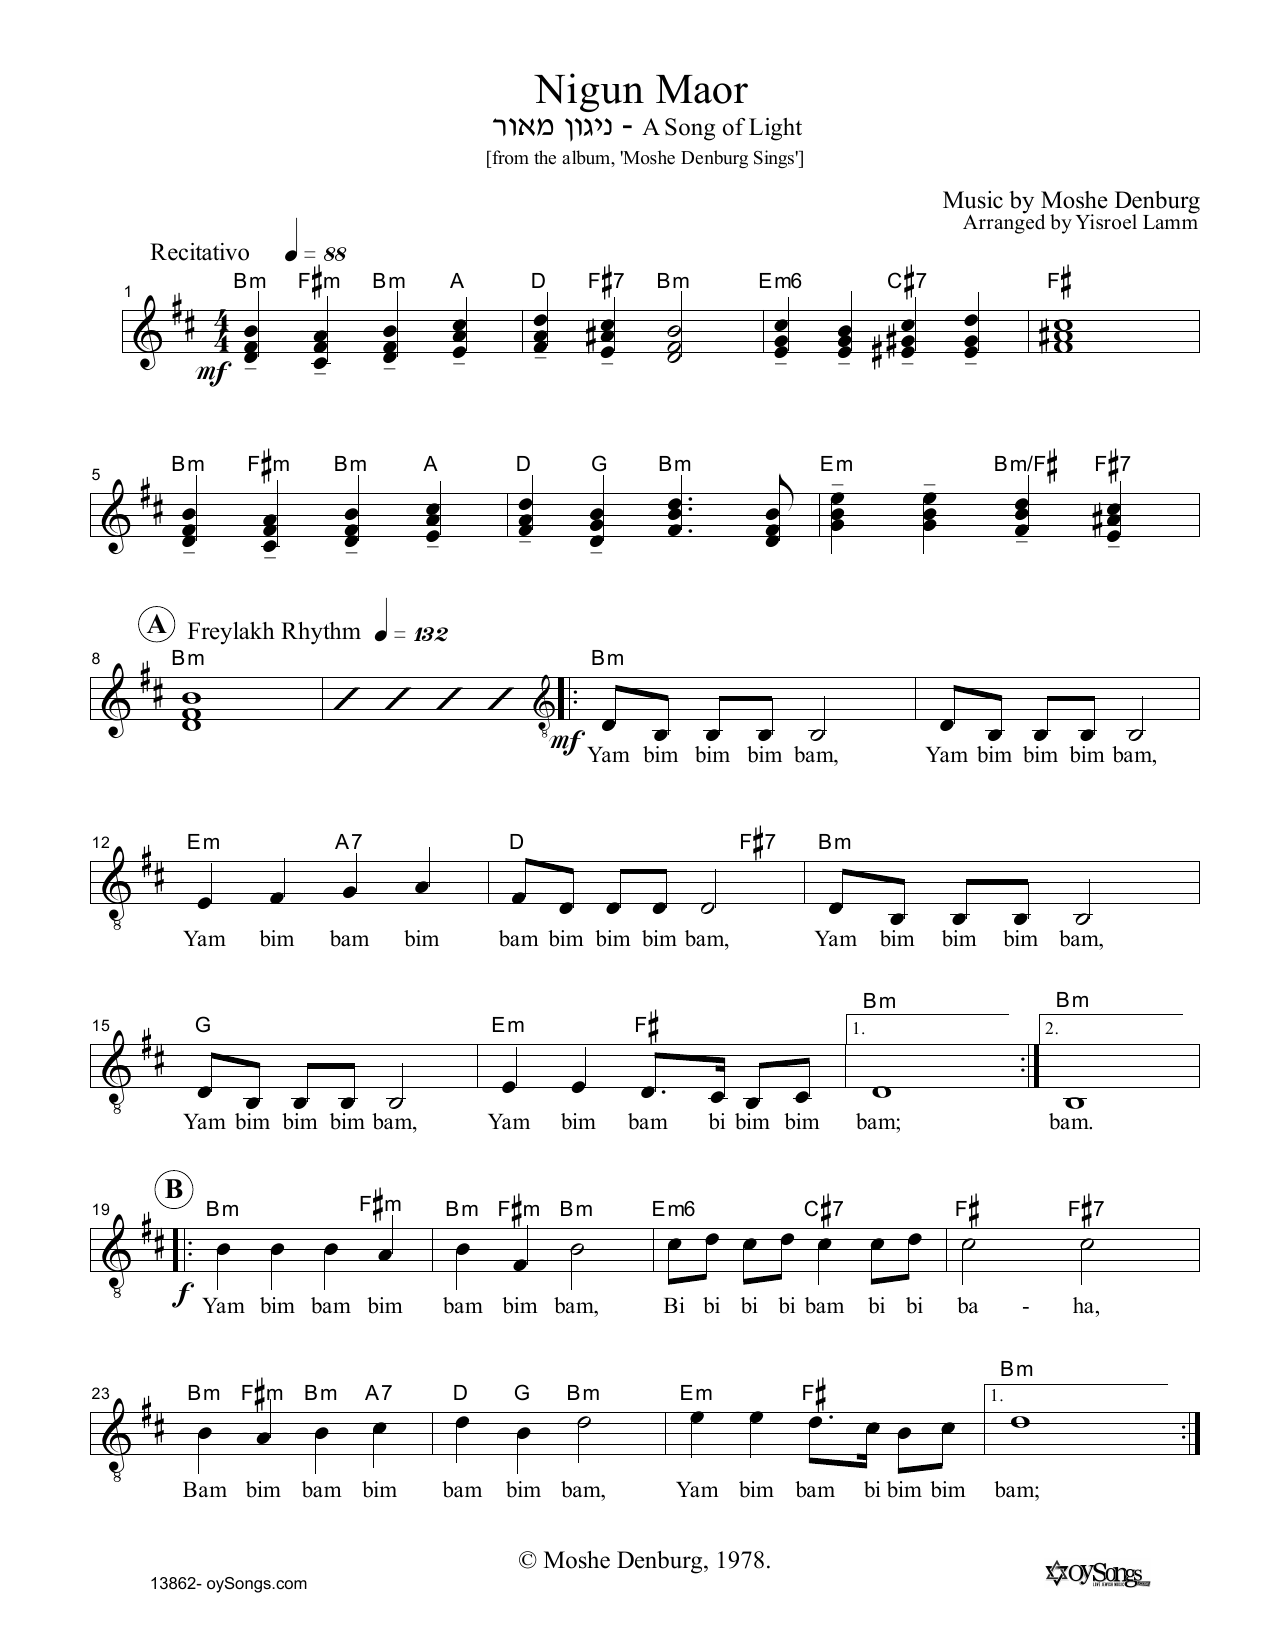 Moshe Denburg Nigun Maor Sheet Music Notes & Chords for Melody Line, Lyrics & Chords - Download or Print PDF